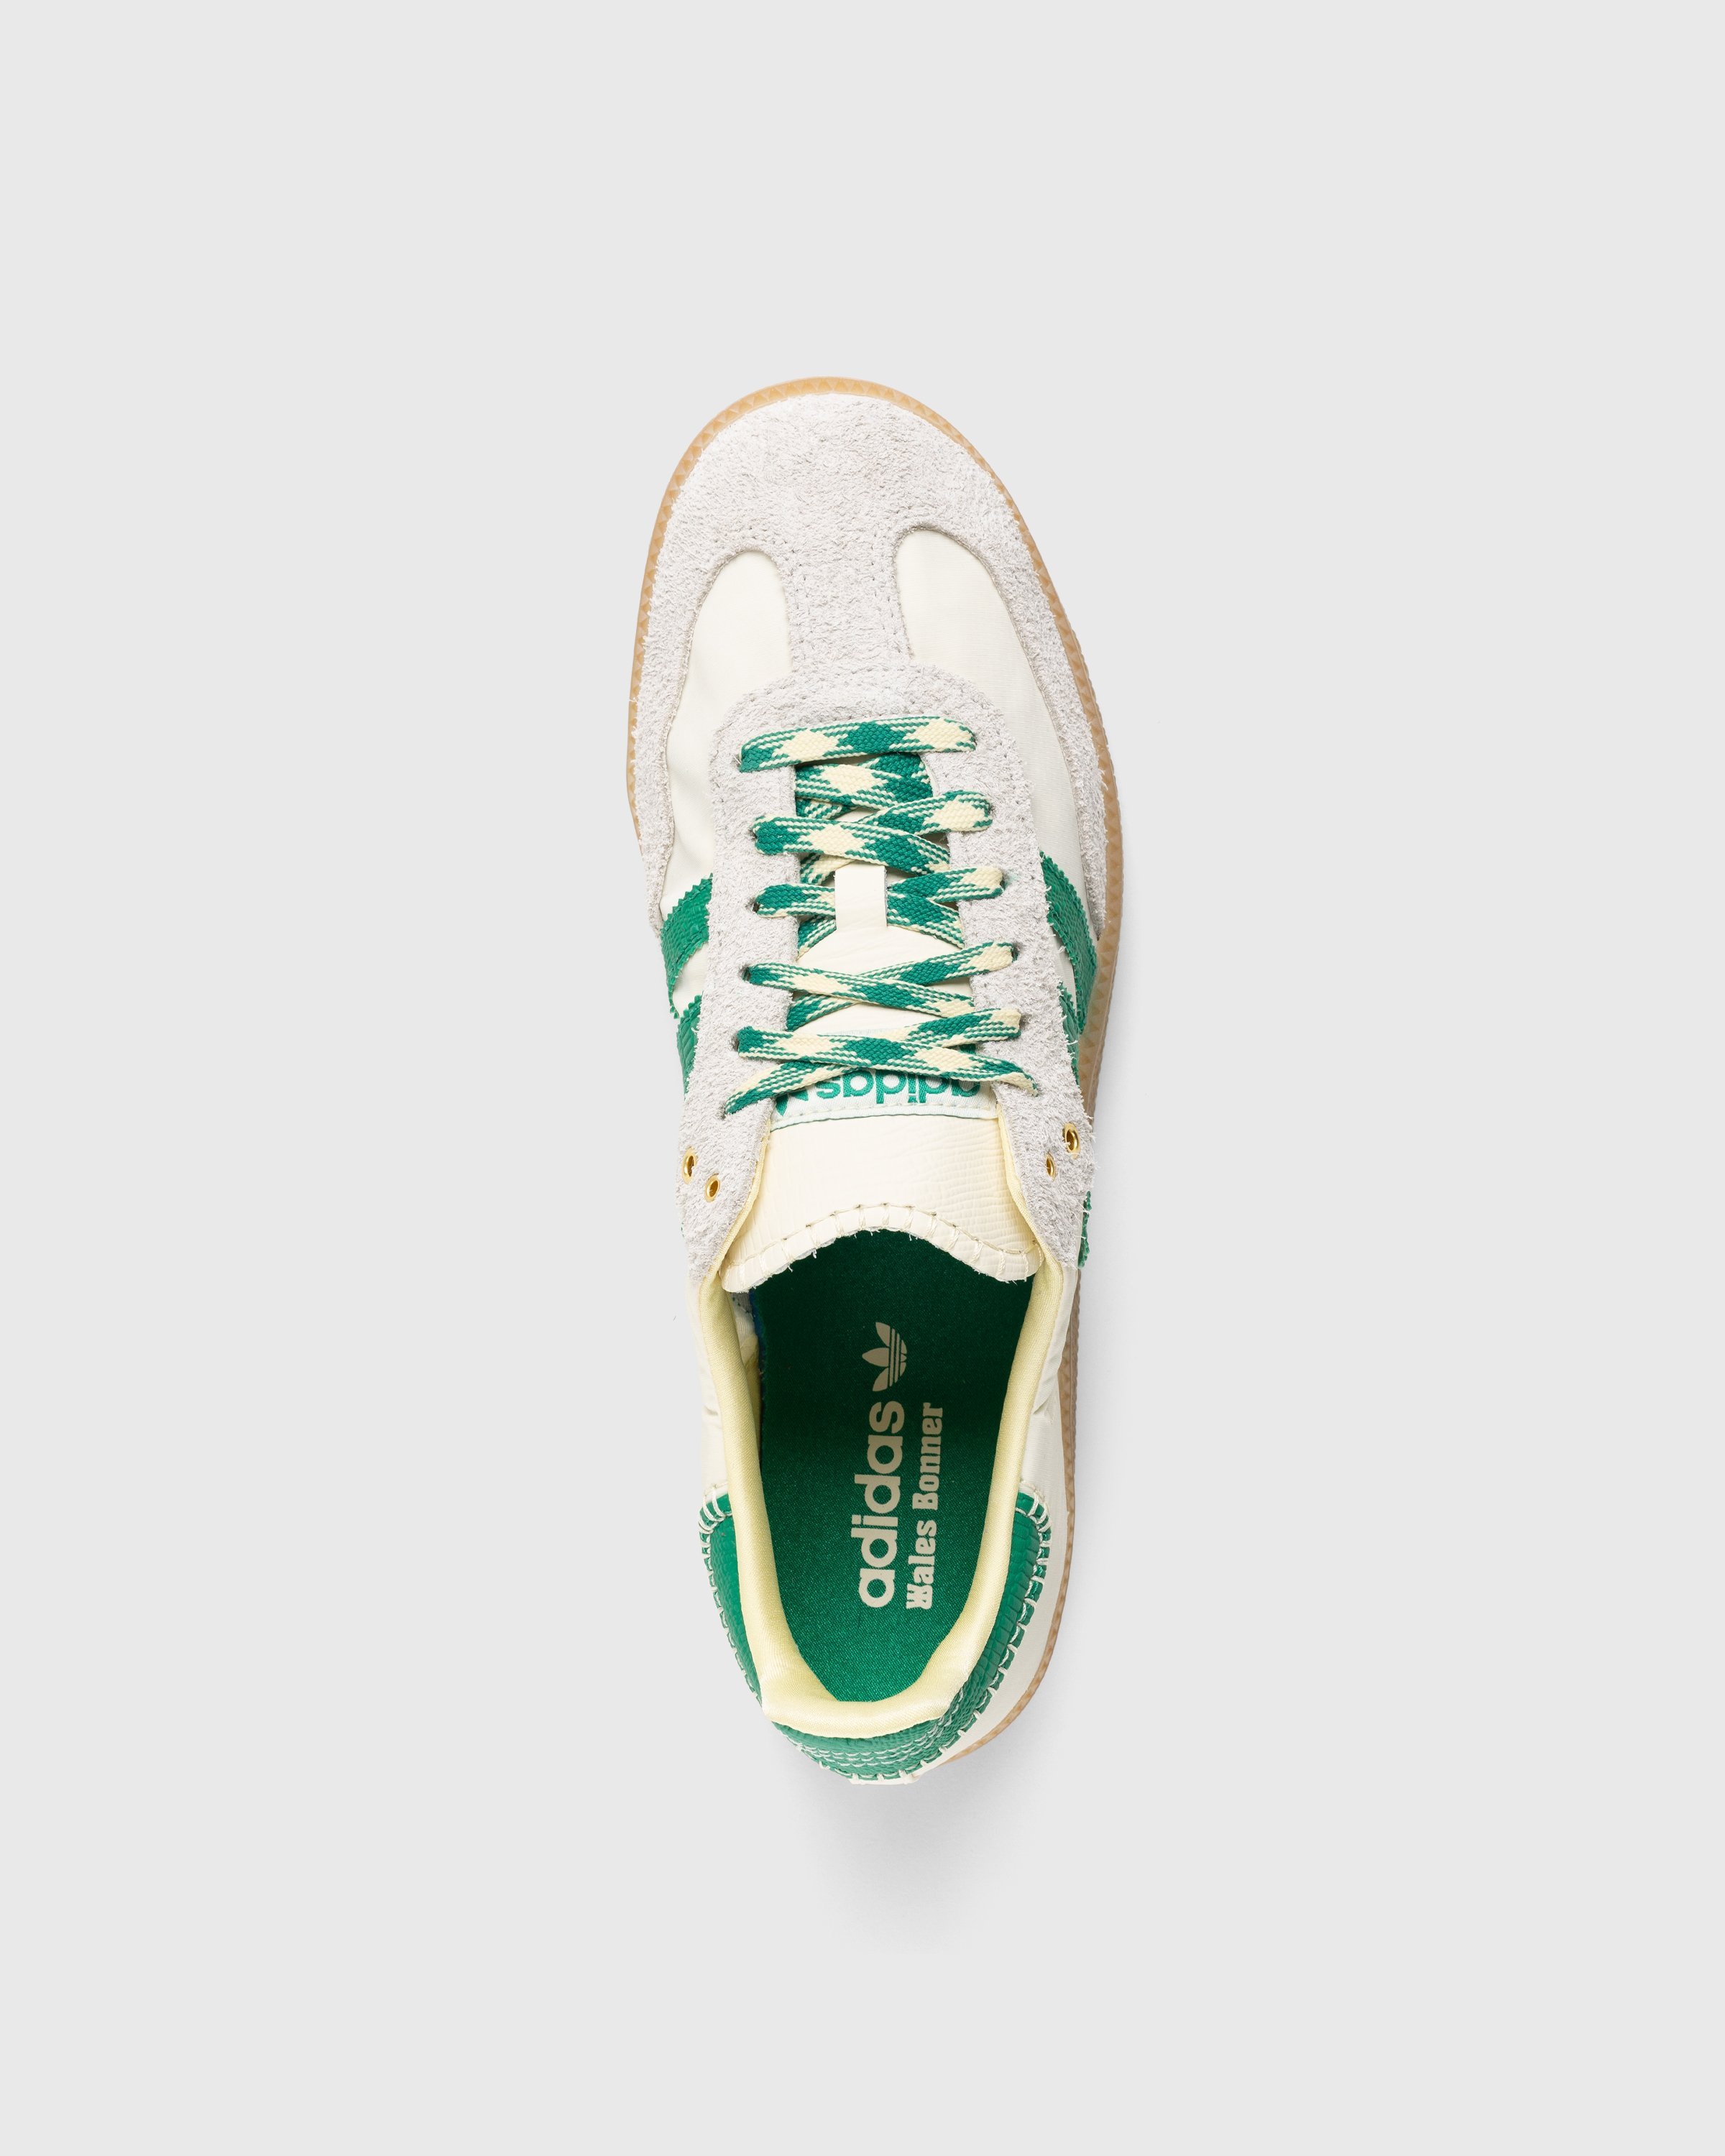 Adidas x Wales Bonner - WB Samba Cream White/Bold Green/Easy Yellow - Footwear - Beige - Image 5